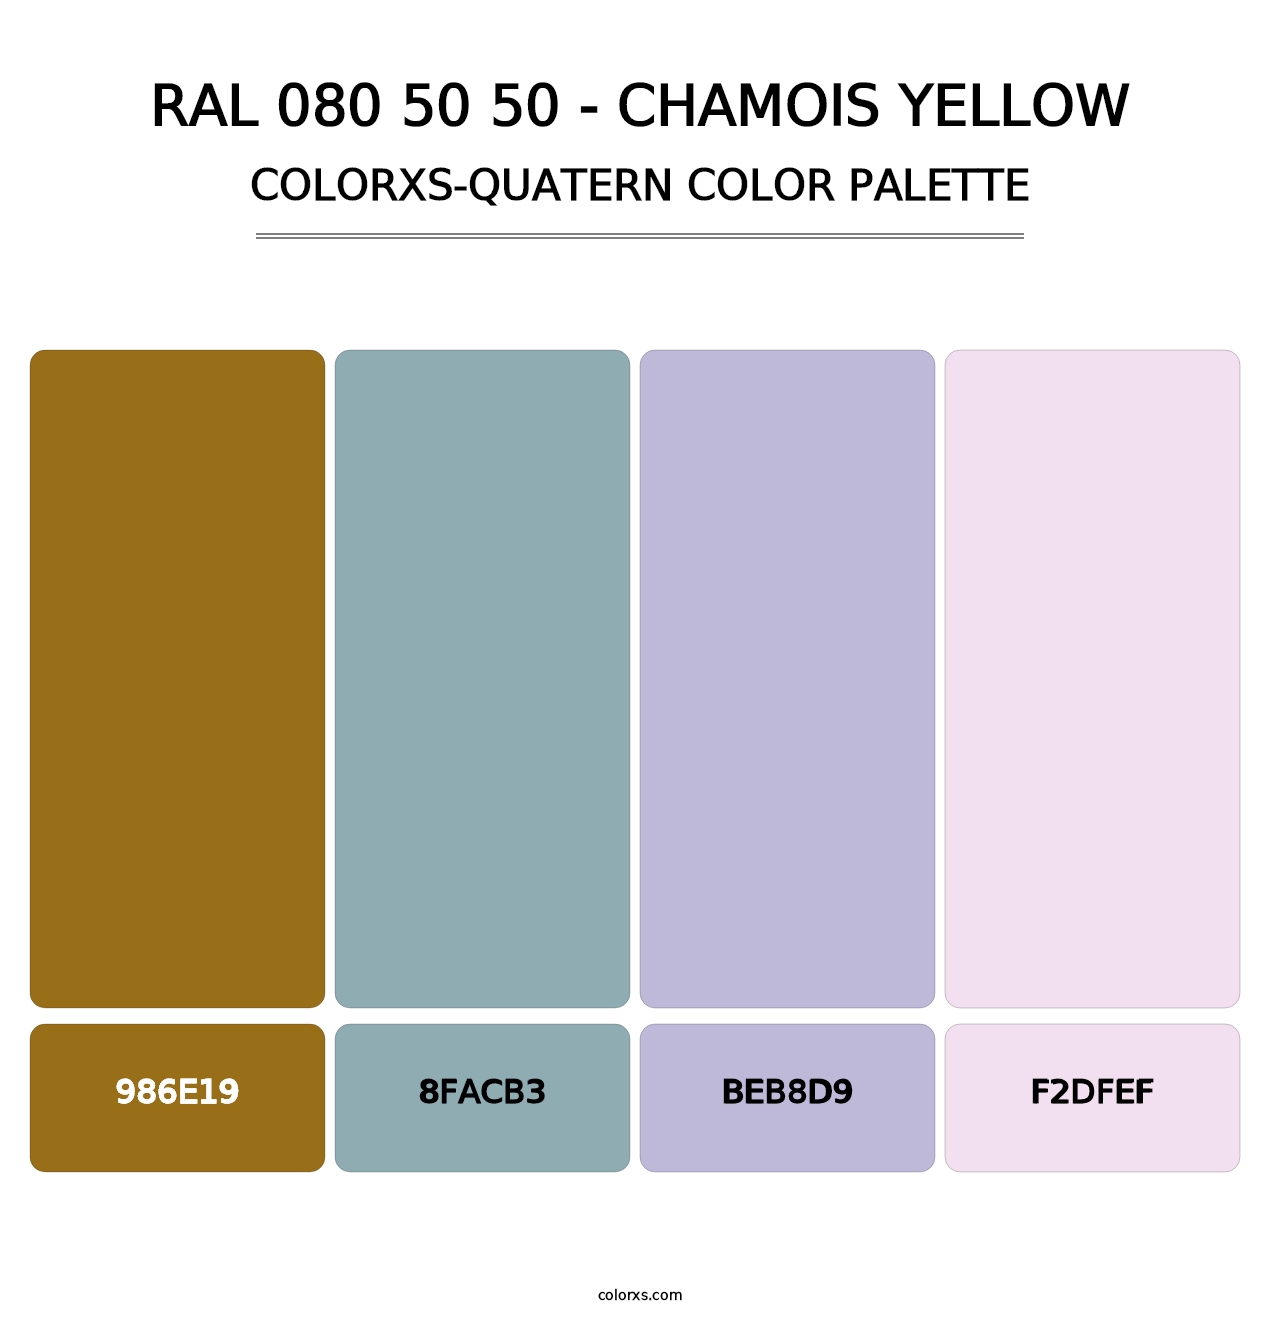 RAL 080 50 50 - Chamois Yellow - Colorxs Quatern Palette